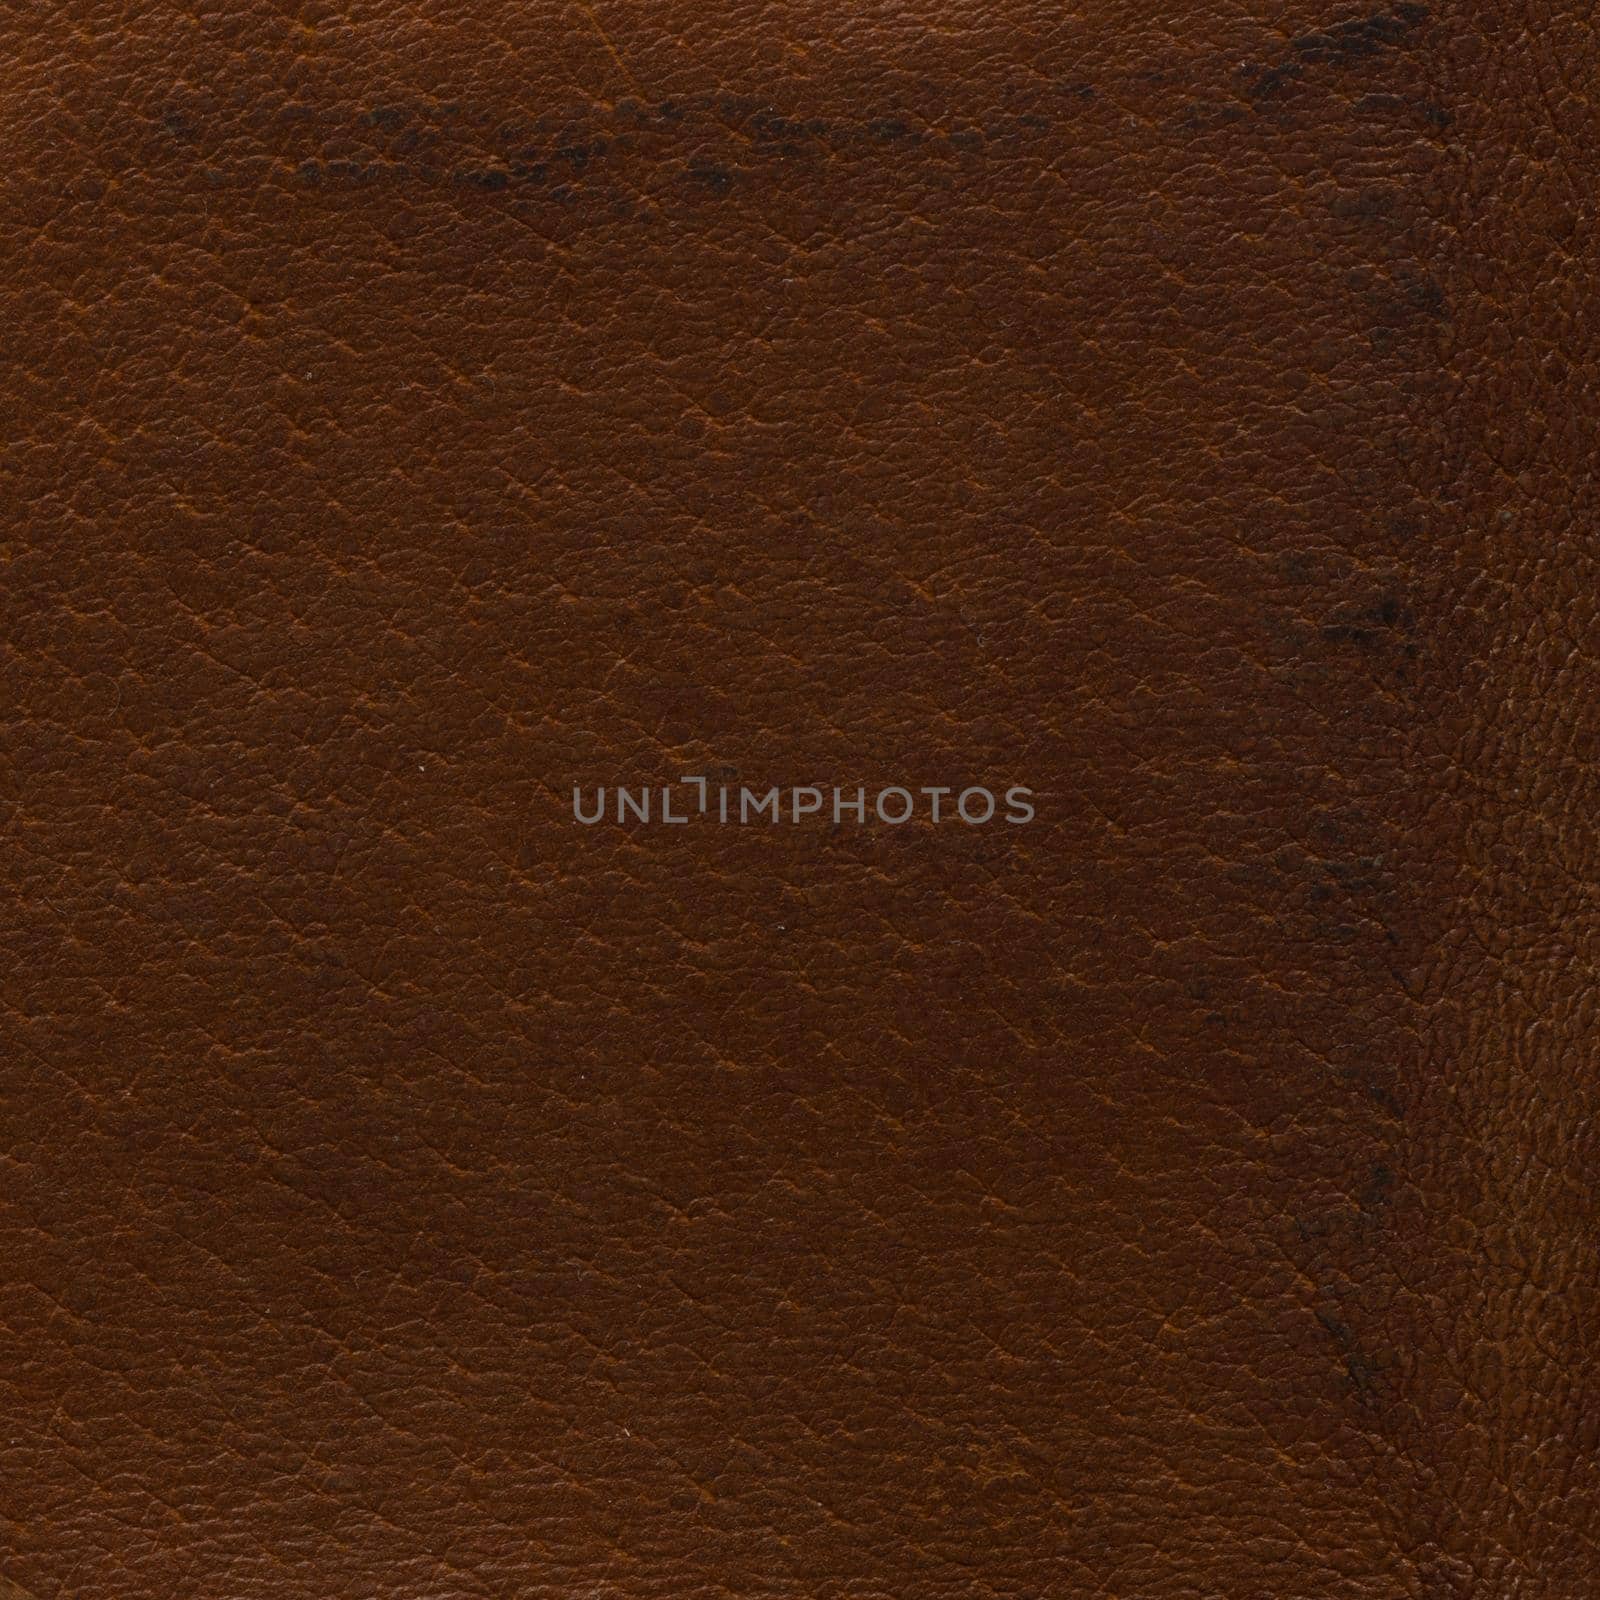 Brown leather texture by nikitabuida